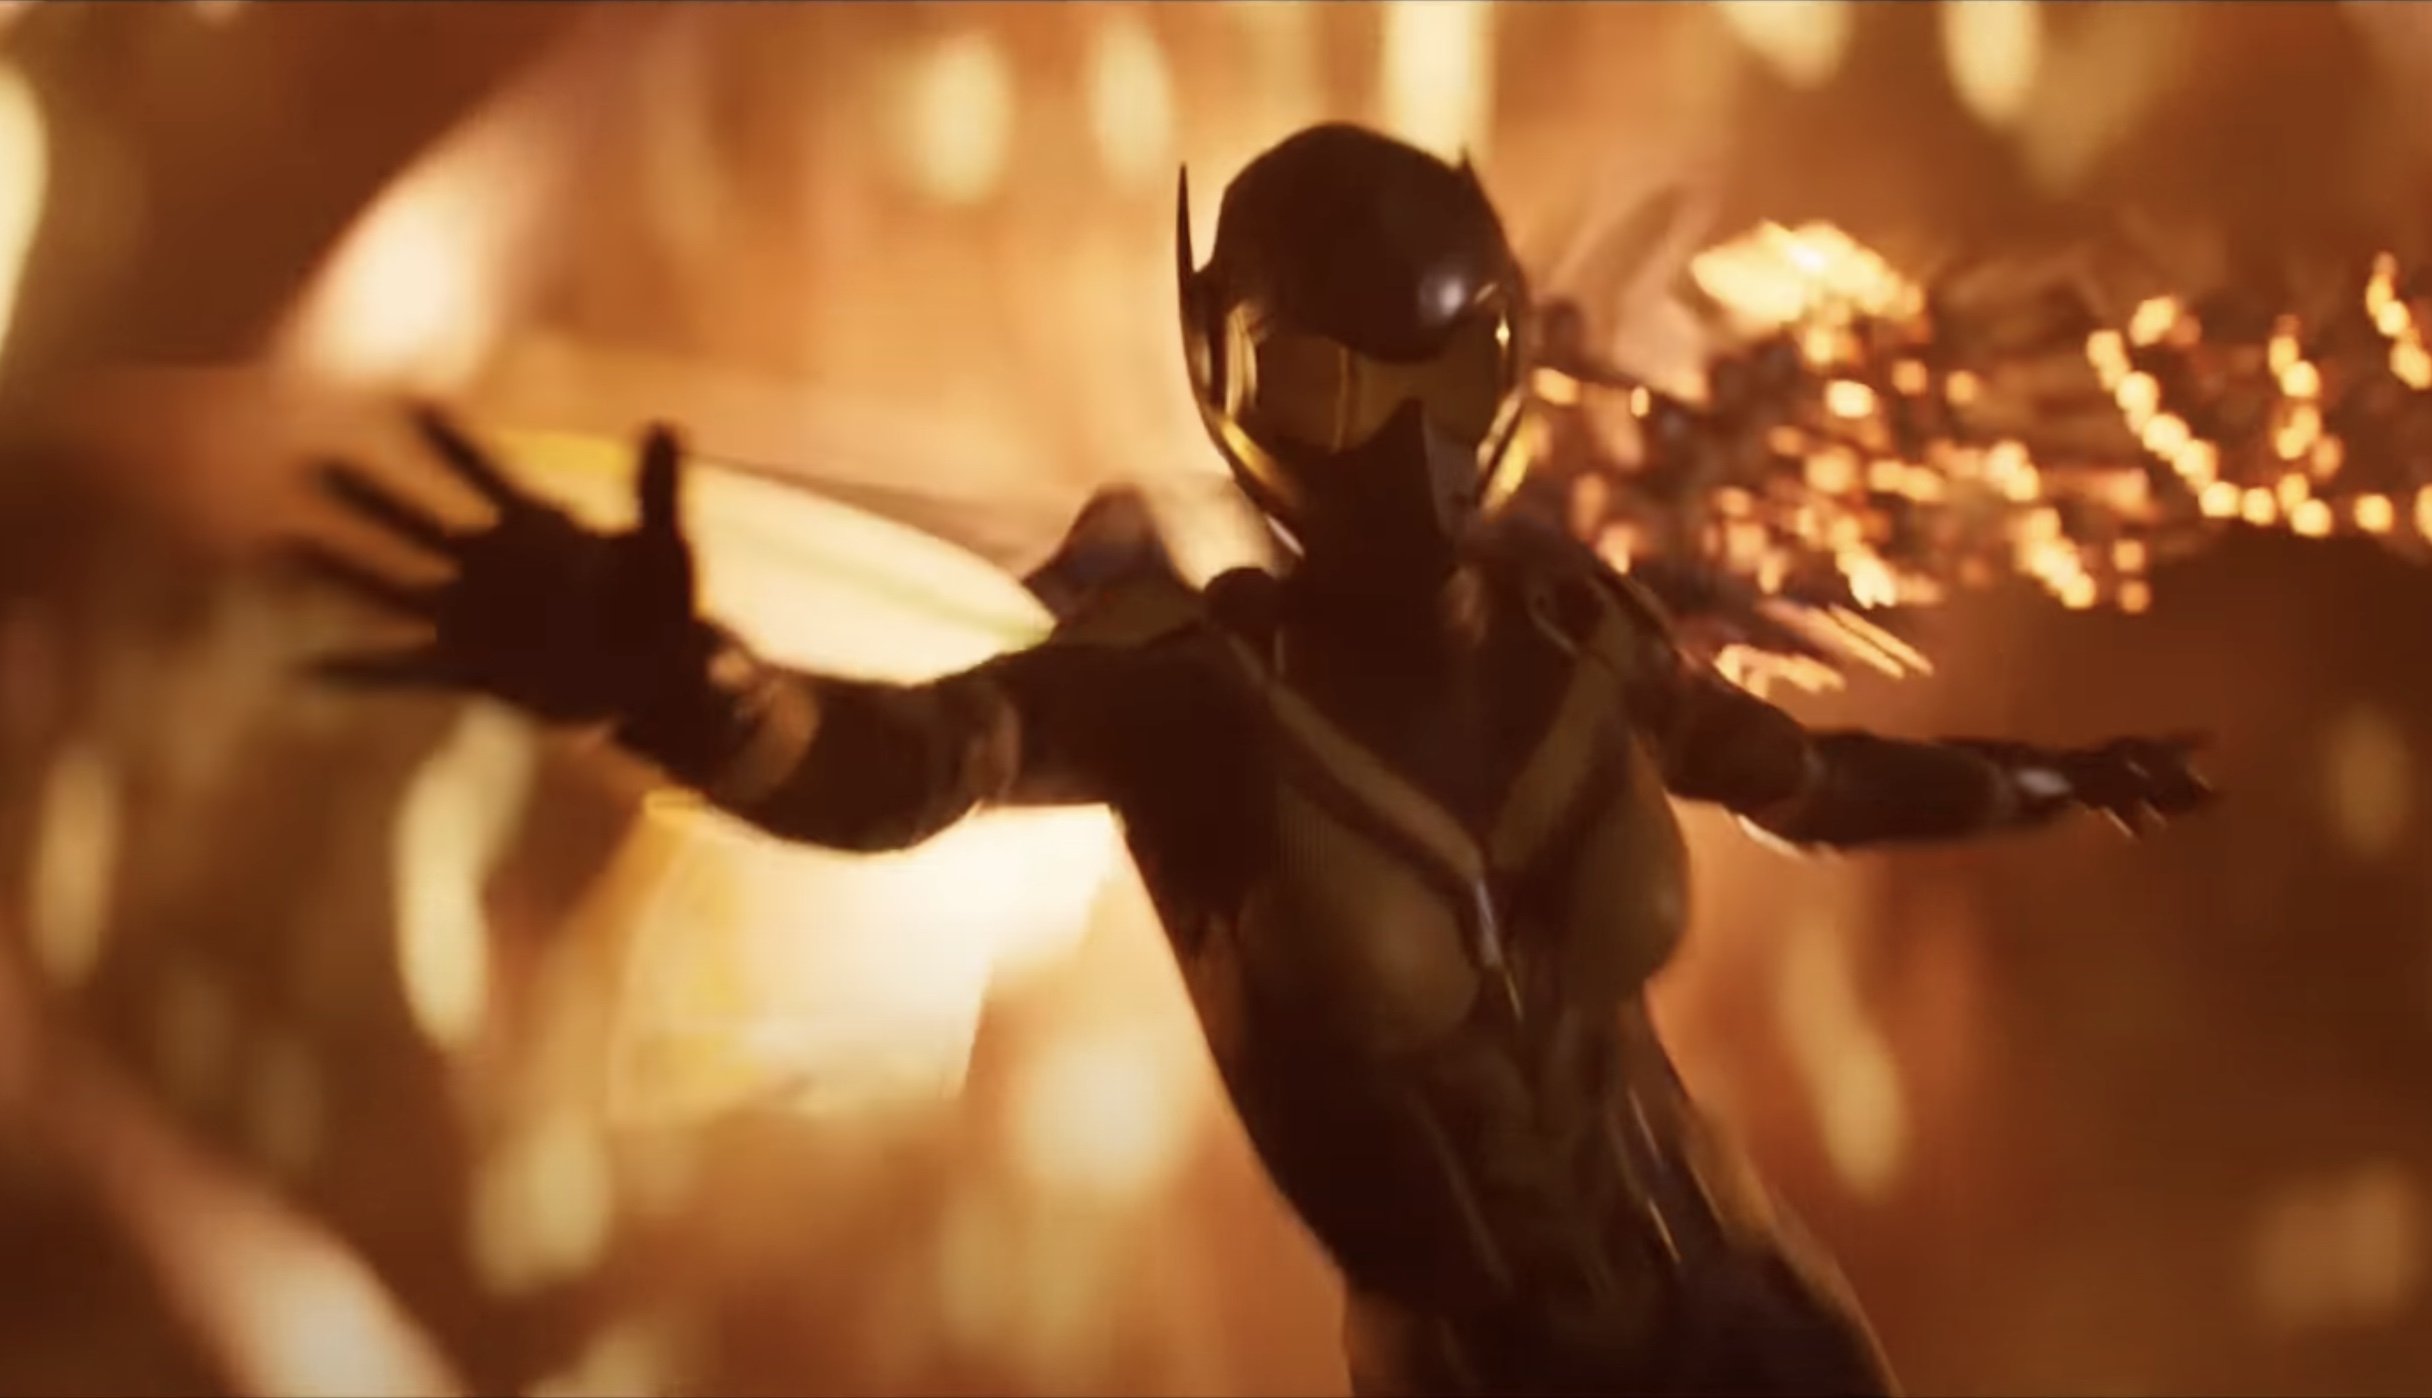 Marvel Studios' Ant-Man and the Wasp: Quantumania - Original